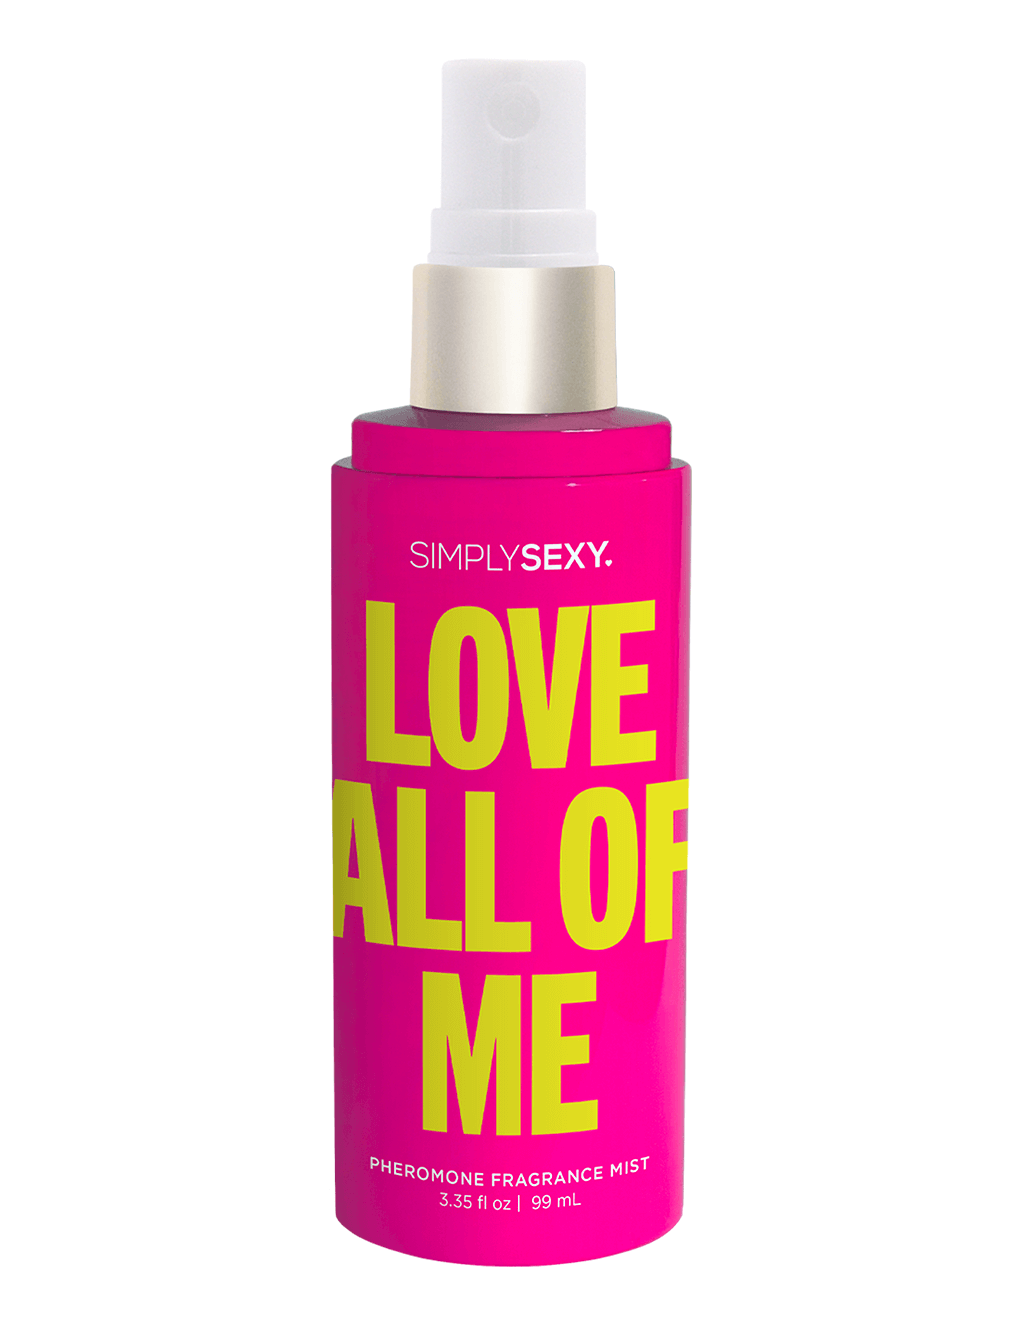 Simply Sexy Pheromone Body Mist Love All Of Me - Spray Nozzle